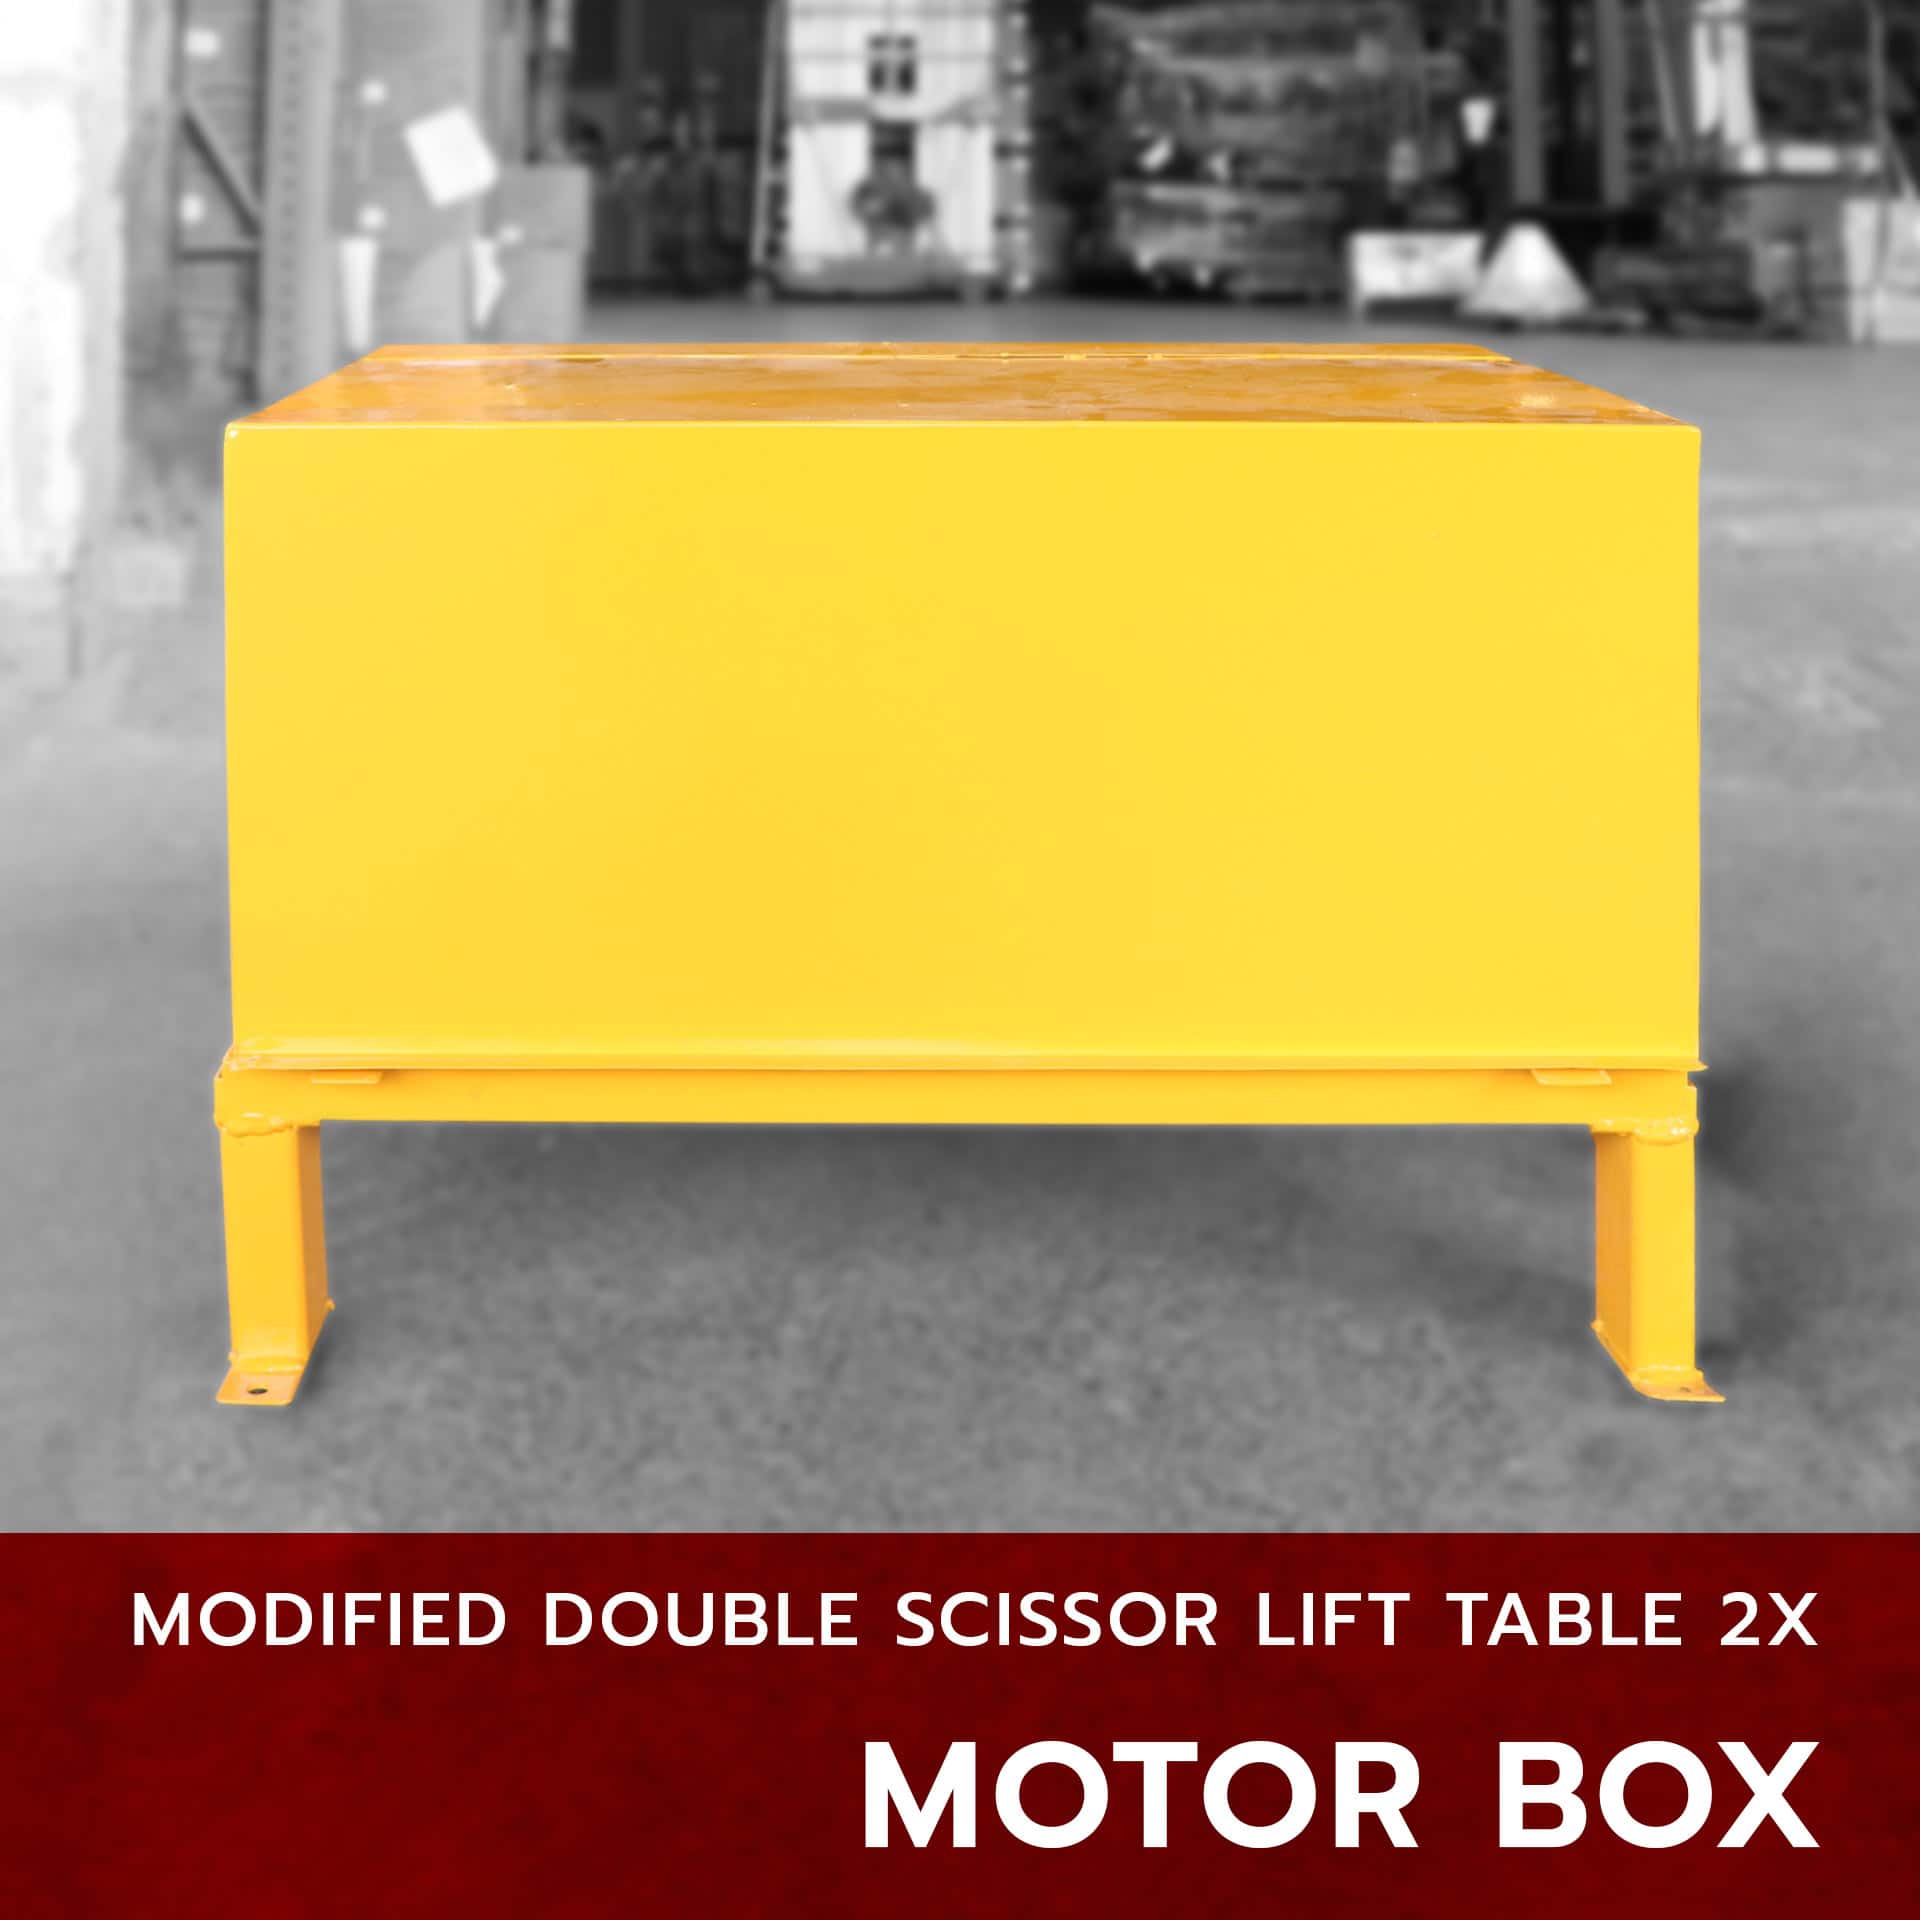 3. Modified double scissor lift table 2x motor box 1